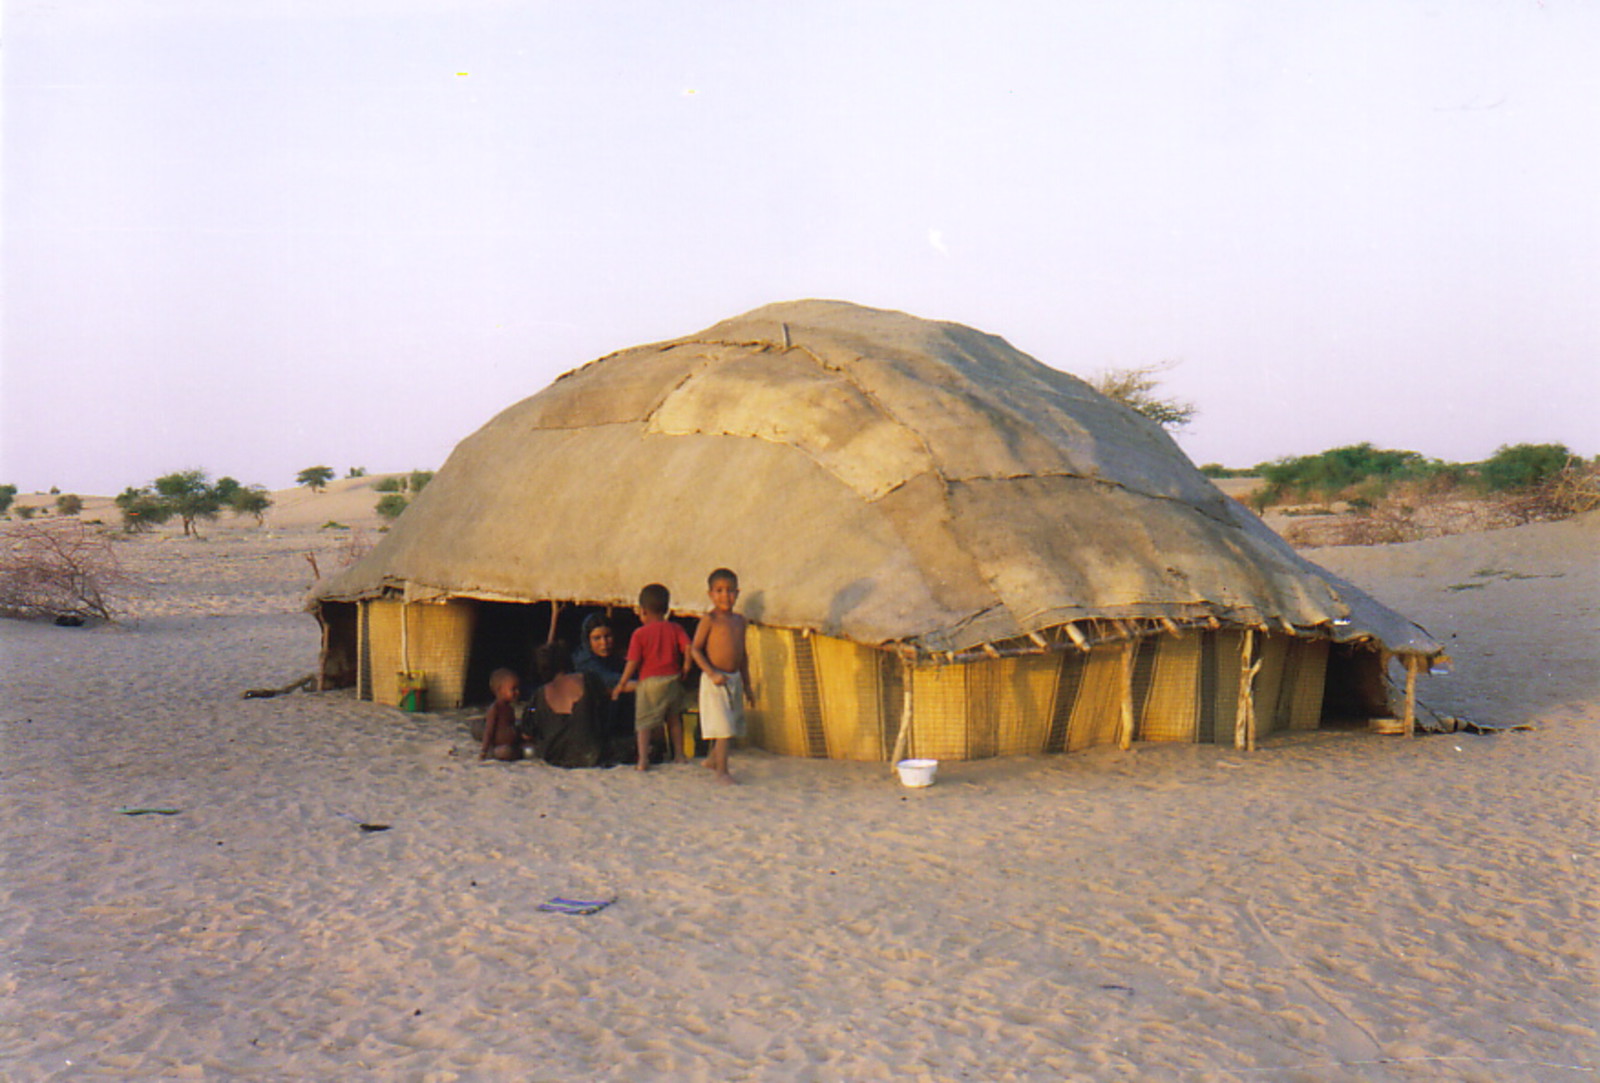 A Tuareg tent in the Sahara